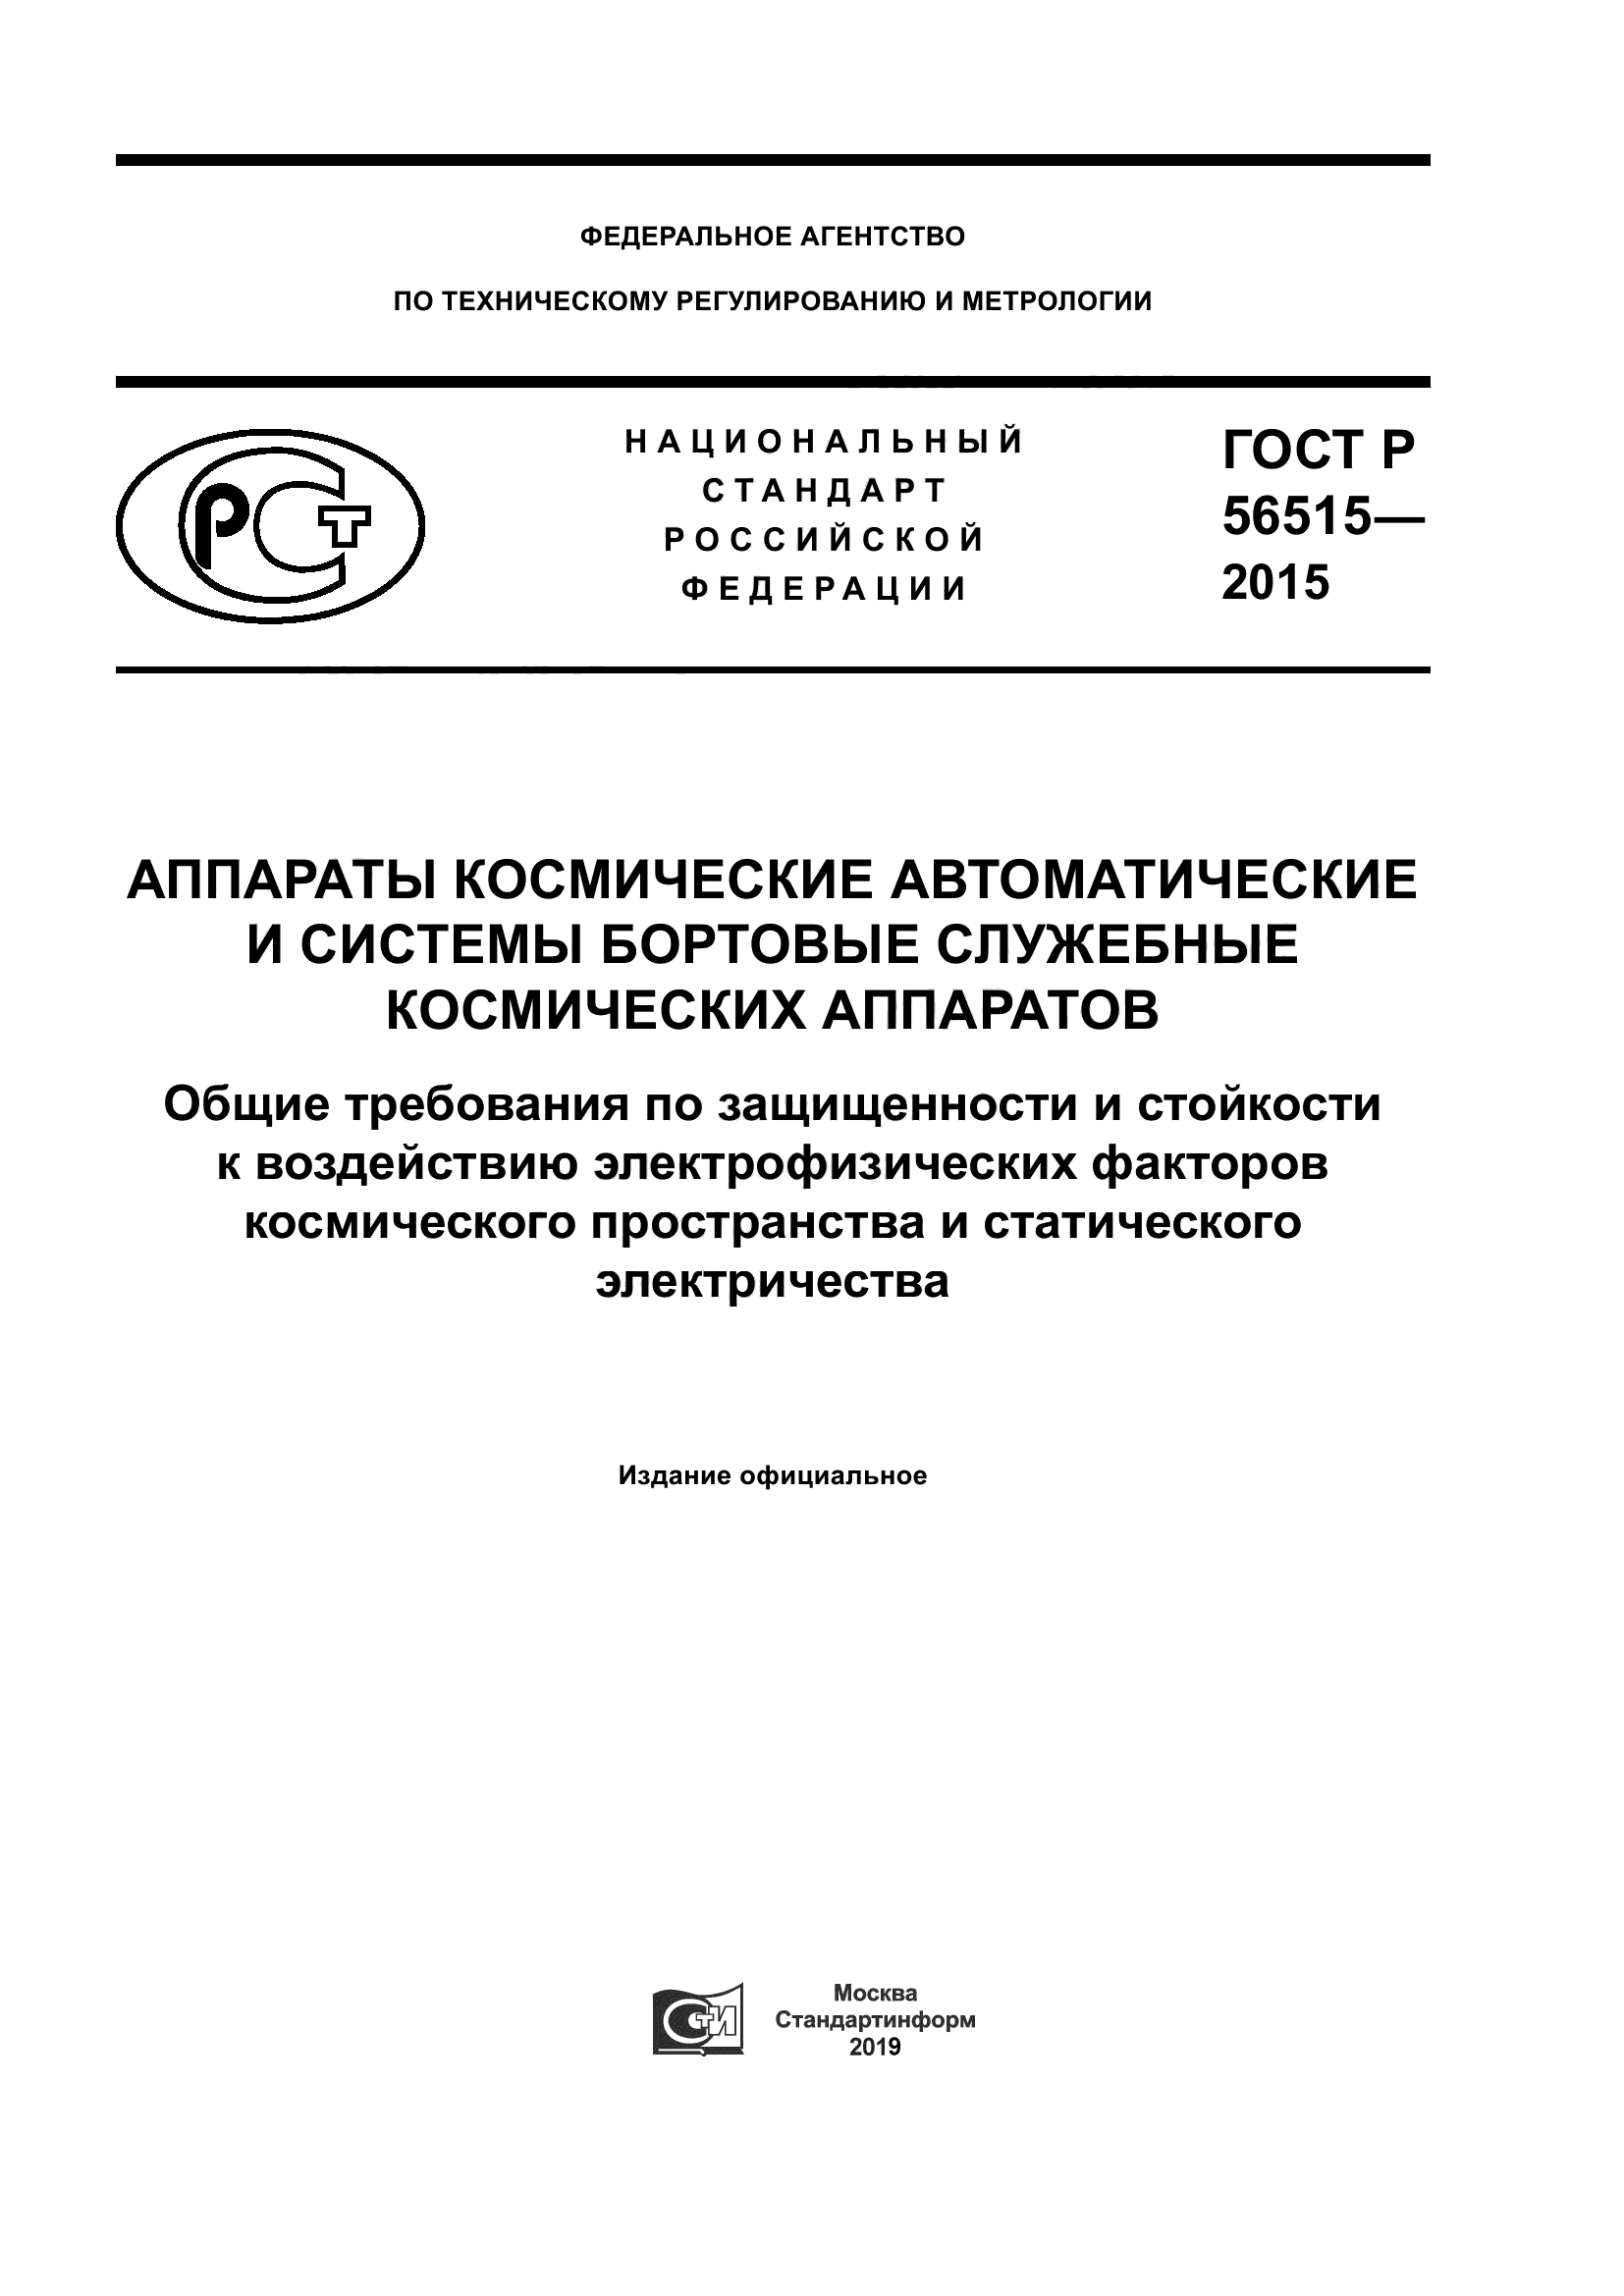 ГОСТ Р 56515-2015